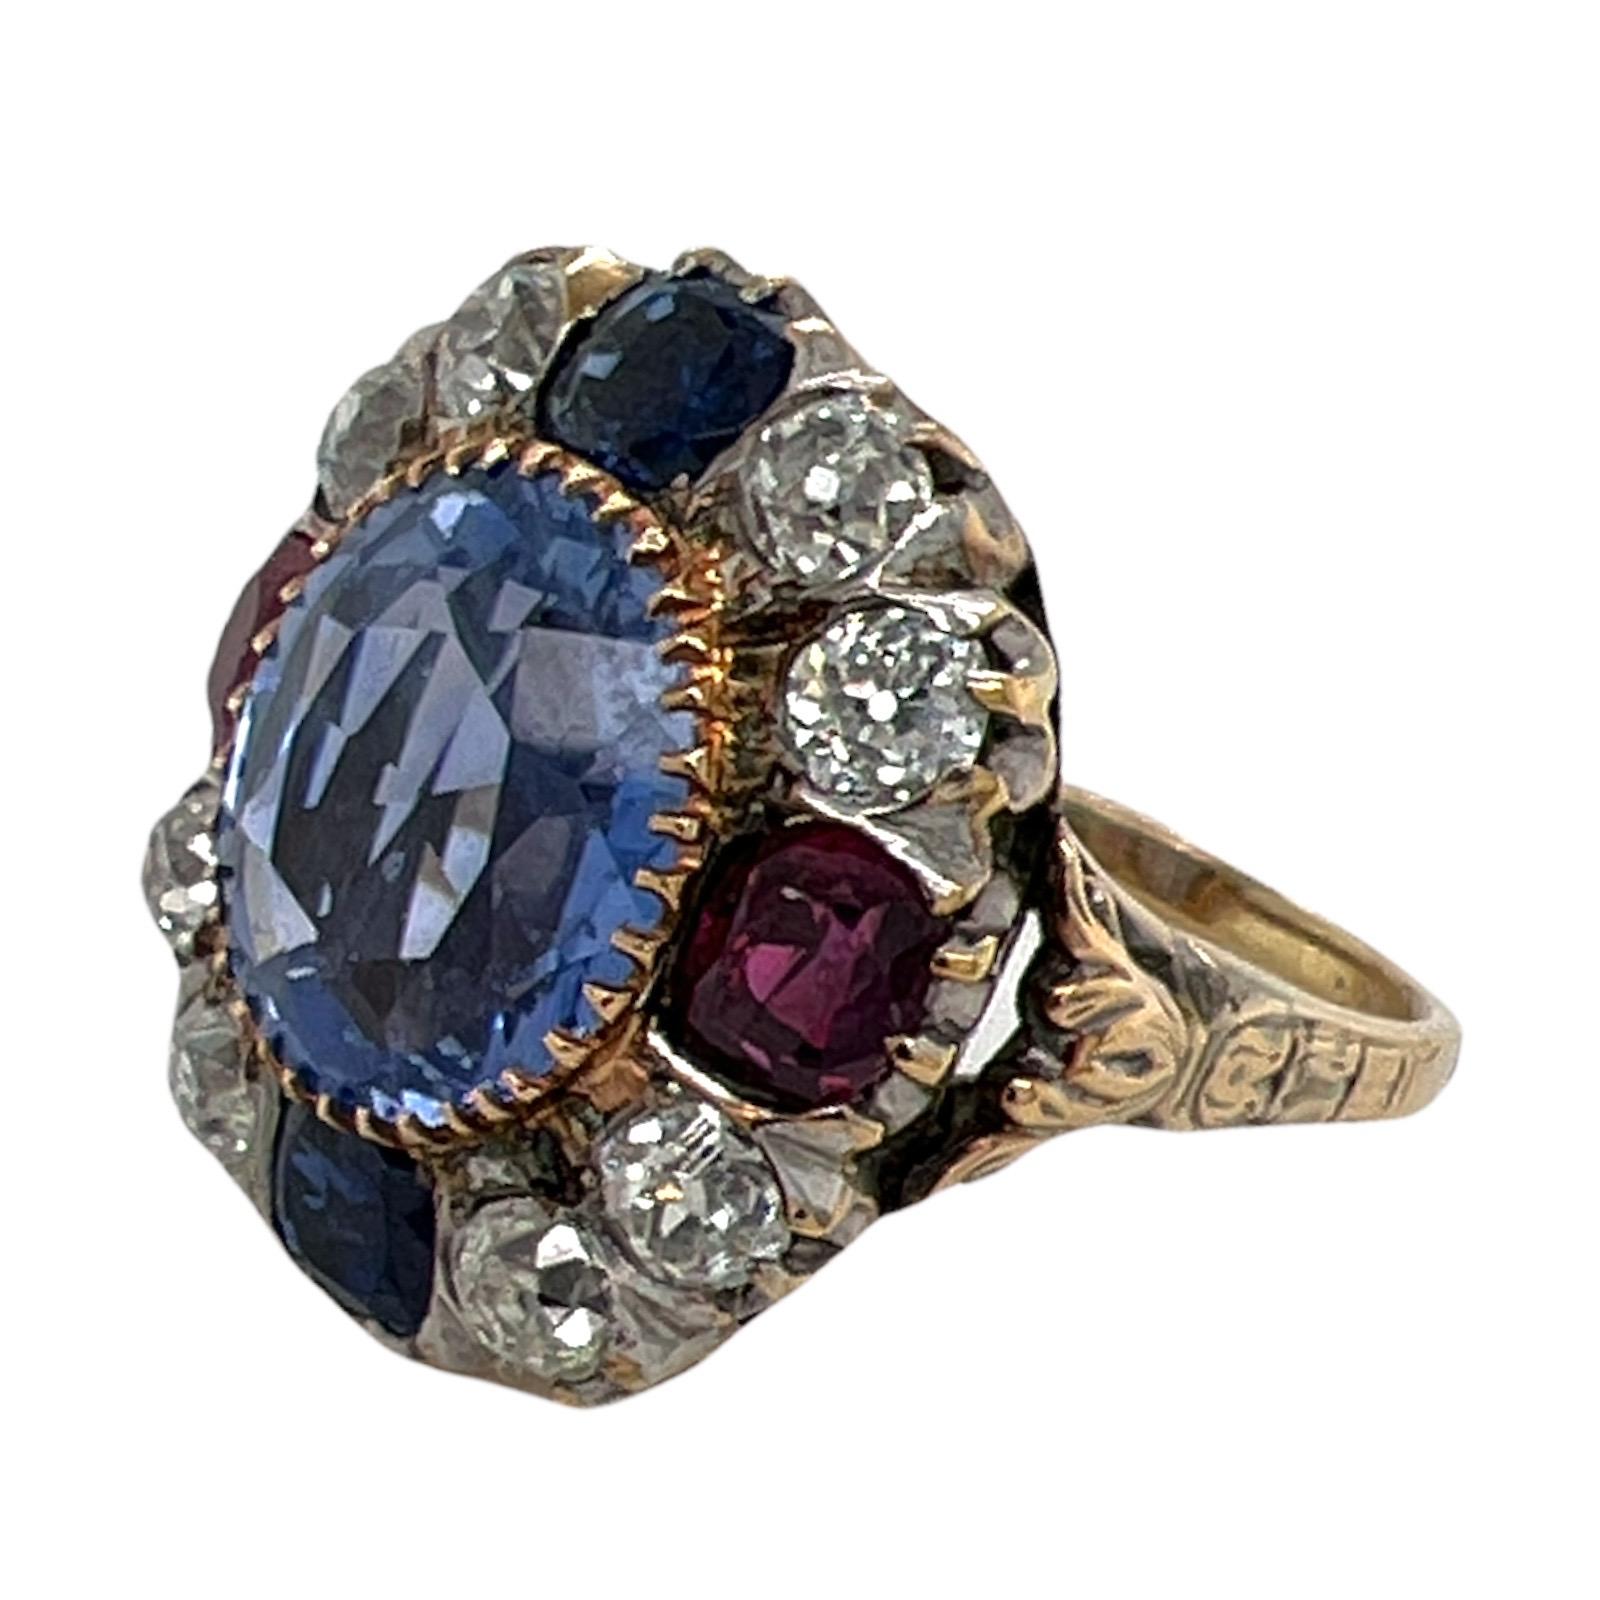 Oval Cut 9.50 Carat No Heat Ceylon Blue Sapphire Diamond Ruby Vintage Cocktail Ring GIA